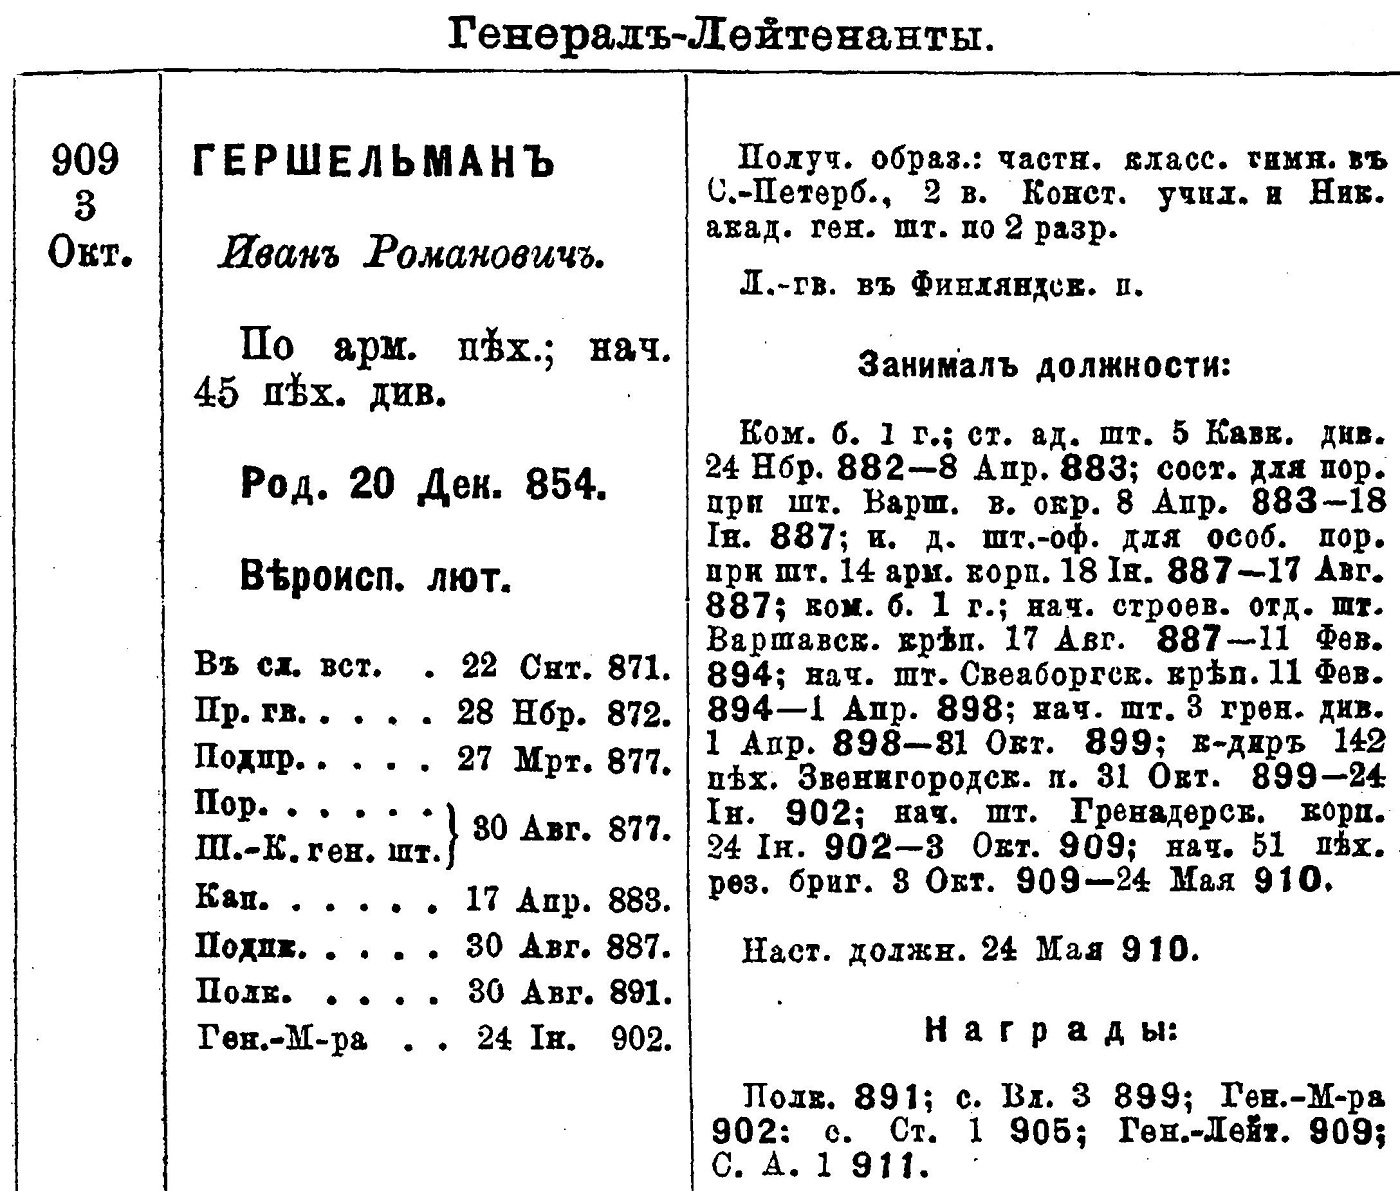 Гершельман Иван Романович ген.-лейт. 1913г..jpg